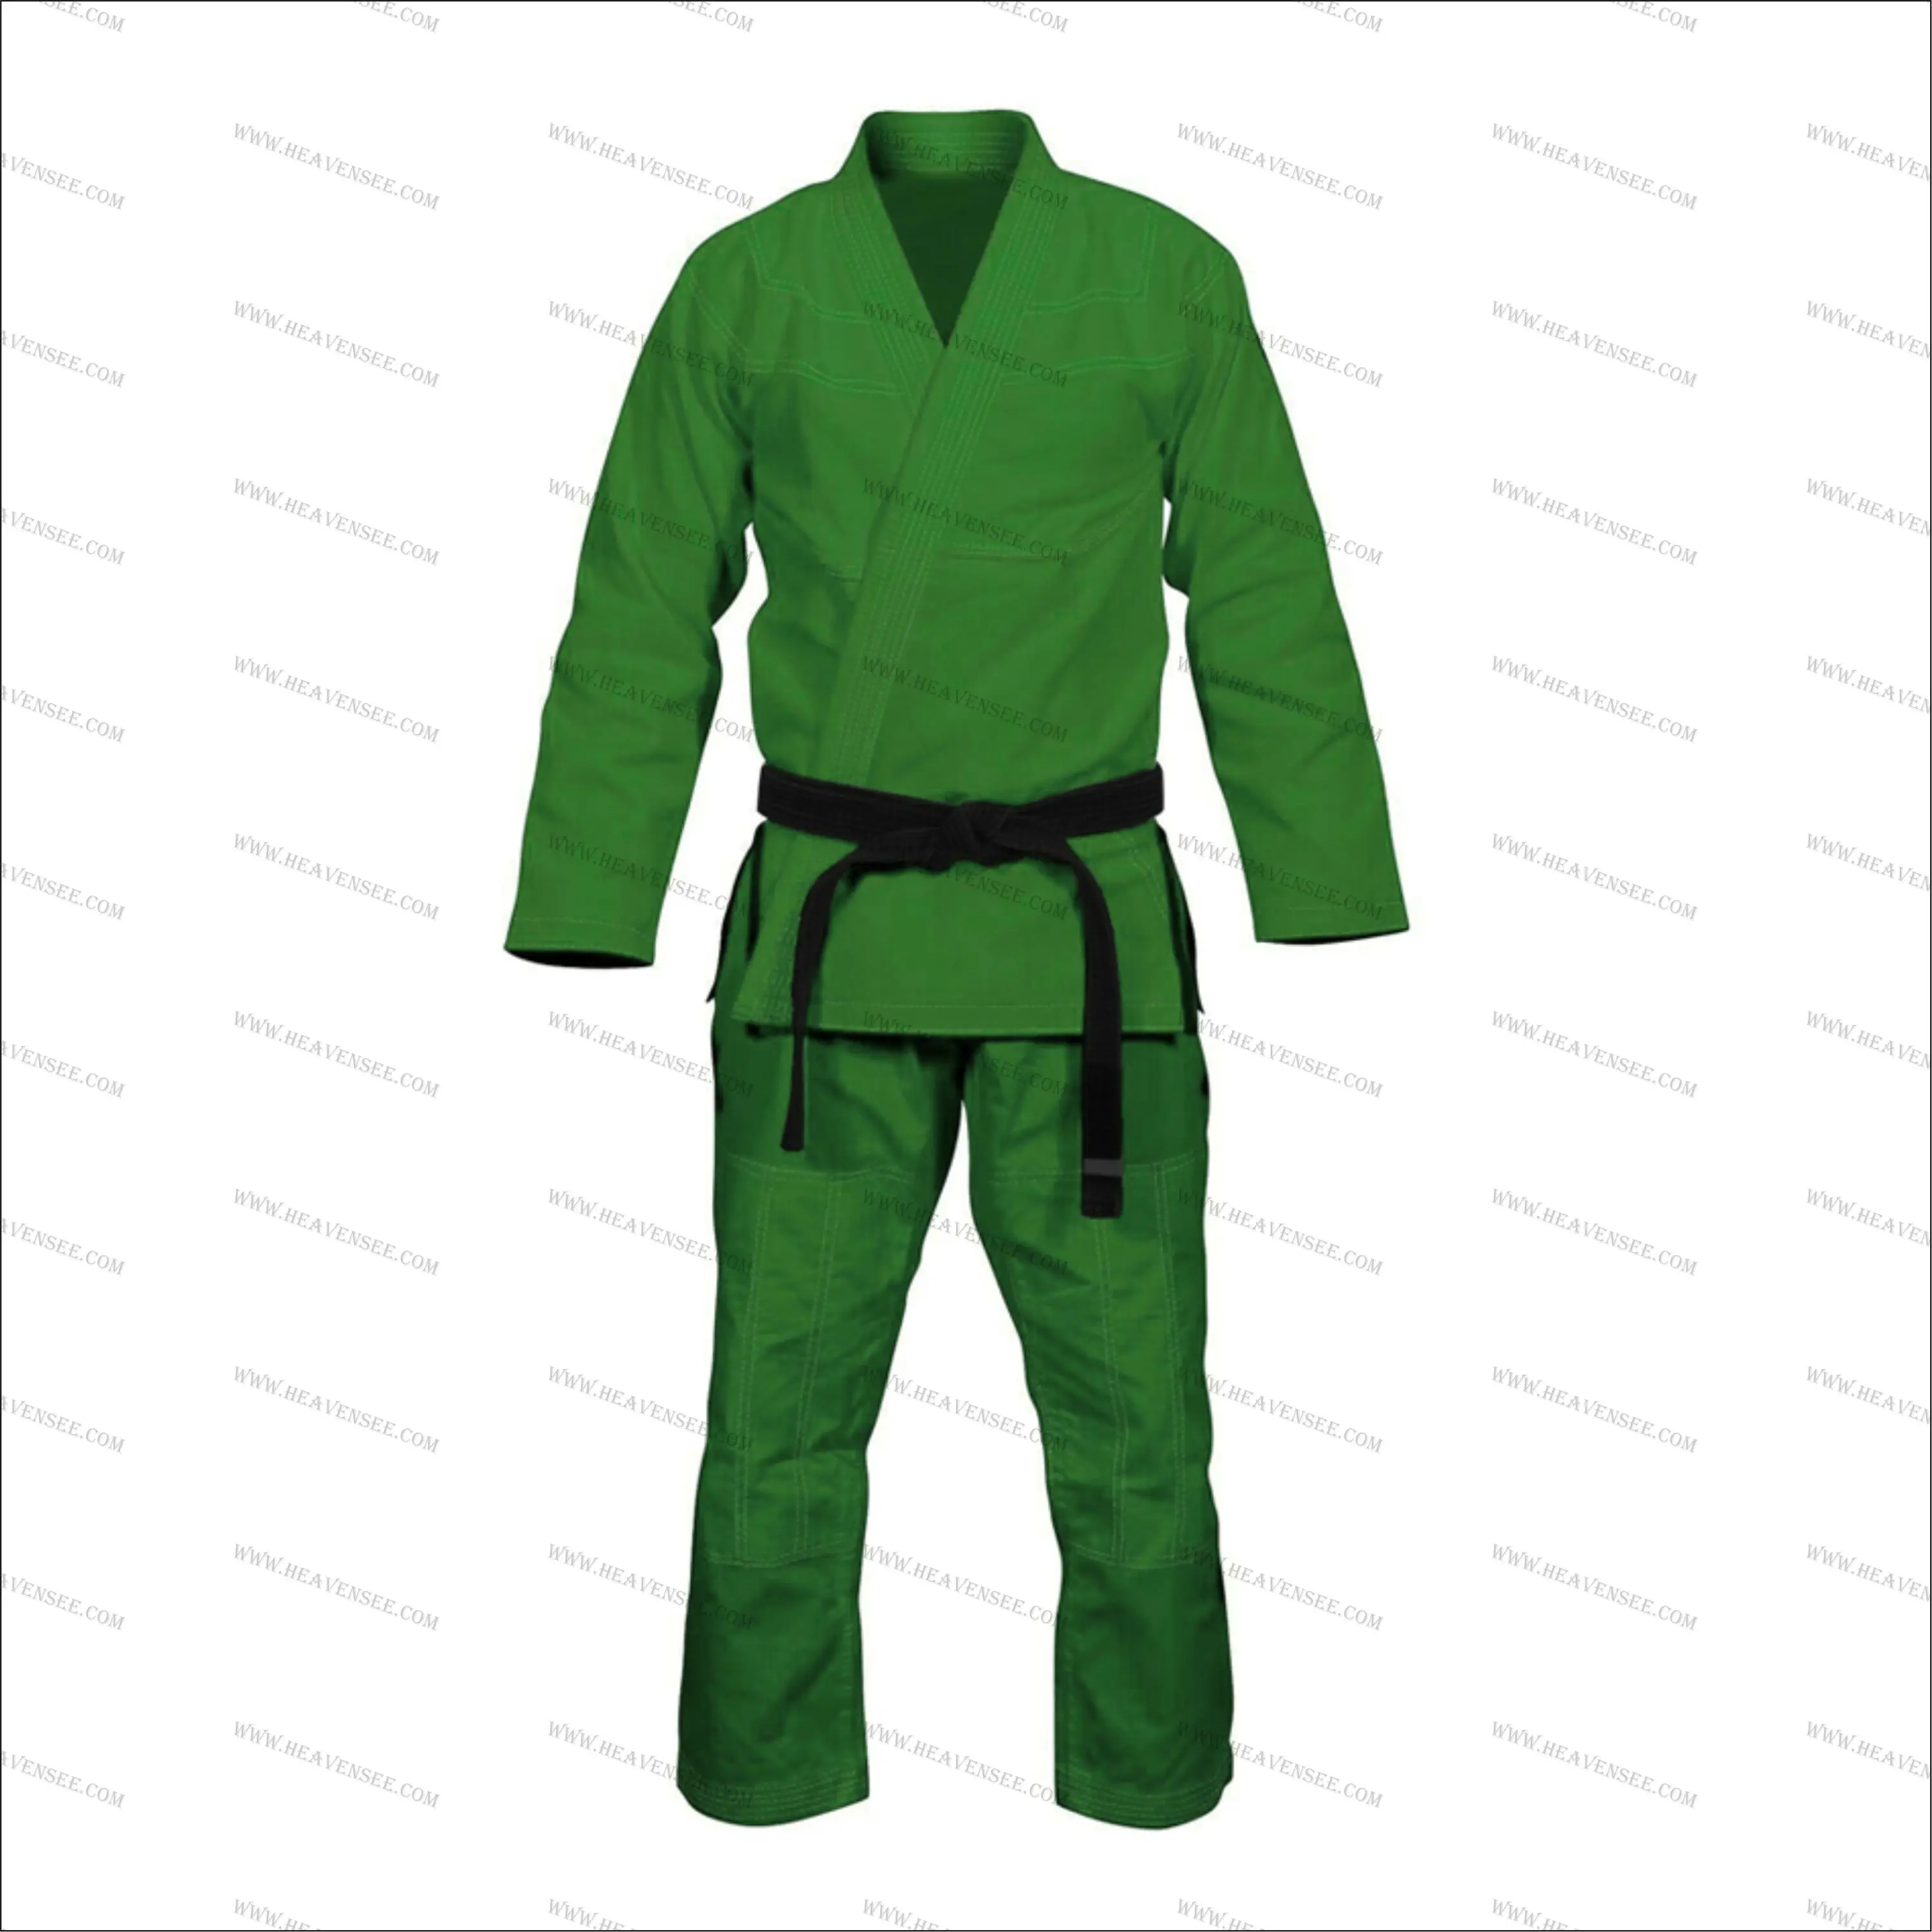 Wholesale Customized Brazilian Jiu Jitsu Gi Bjj Gi Kimono Gi S Shoyoroll Cut Martial Arts Uniform Buy Jiu Jitsu Gi Hemp Judo Gi Fabric Judo Gi Product On Alibaba Com